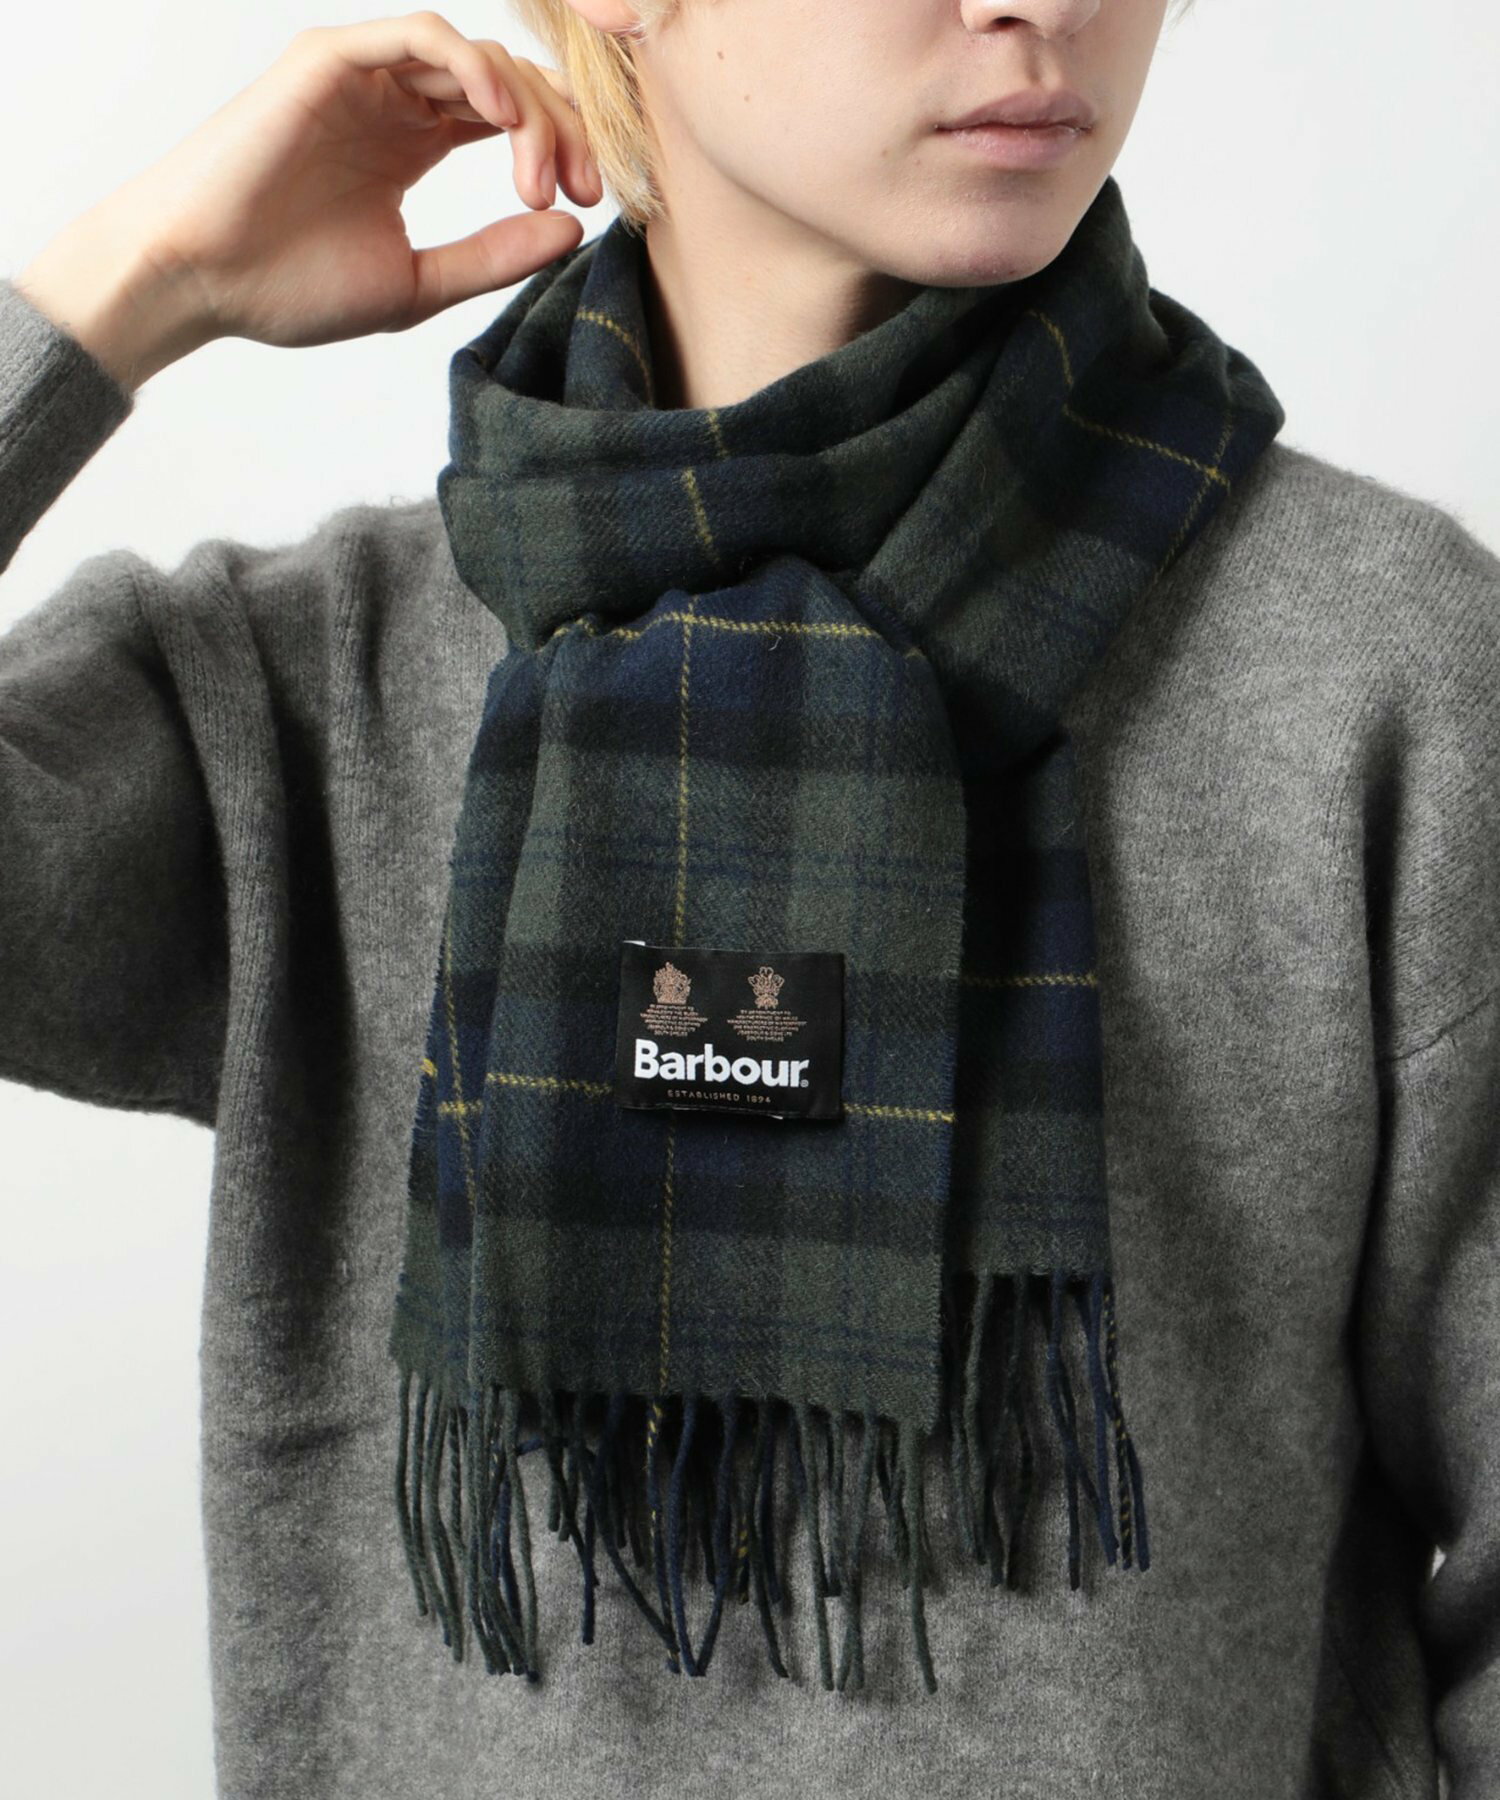 Barbour/(U)barbour galingale tartan scarf